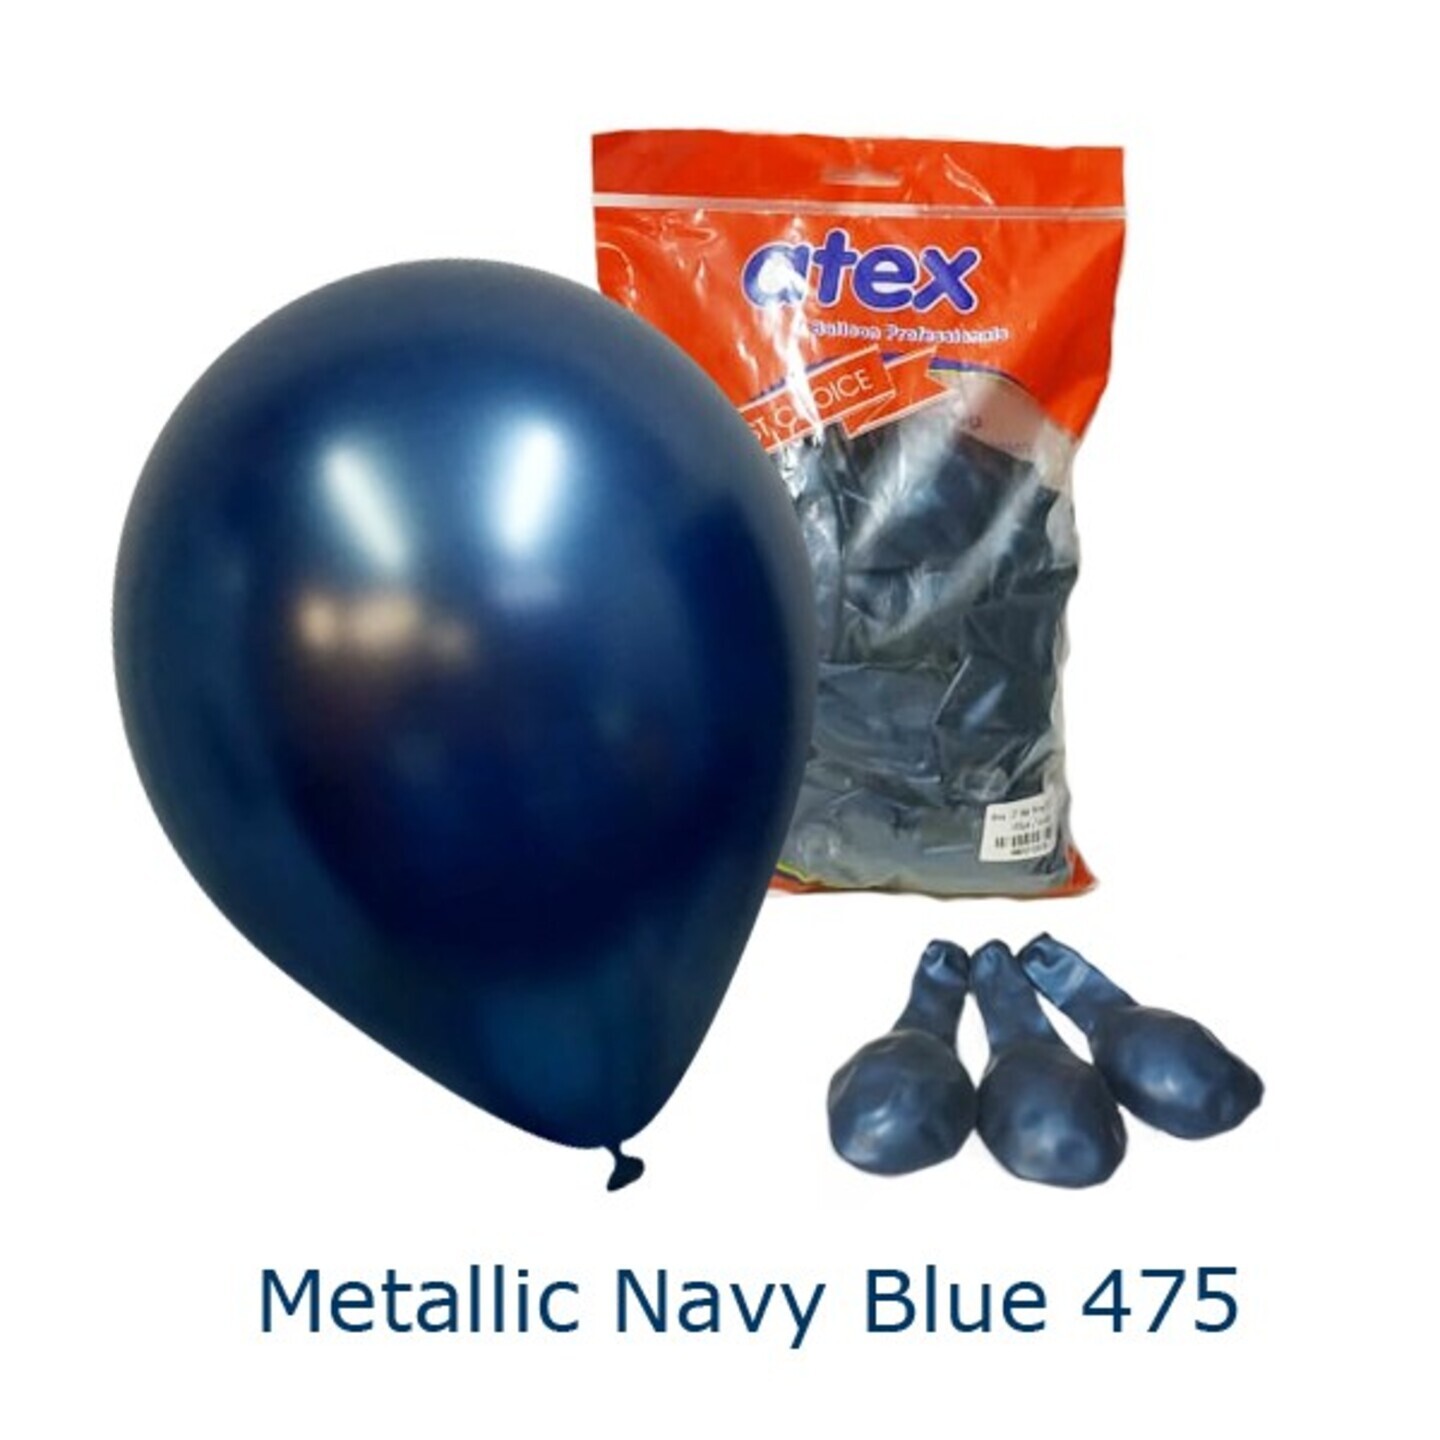 Metallic Navy Blue 475